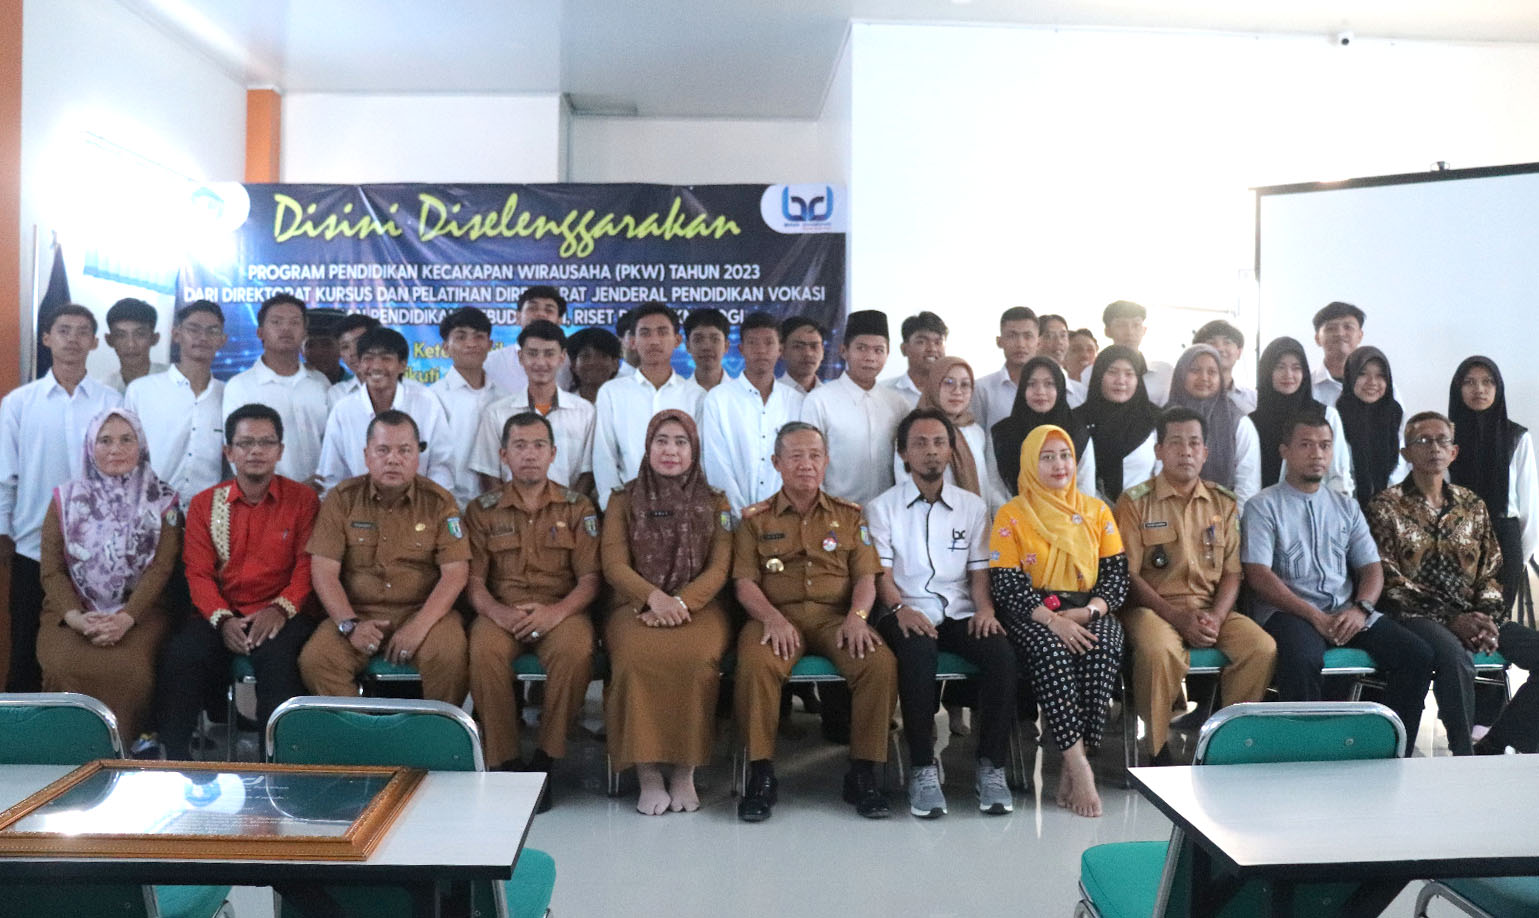 Kemendikbudristek-LPK Bina Dharma Pringsewu Lampung Gelar Pendidikan Kecakapan Wirausaha